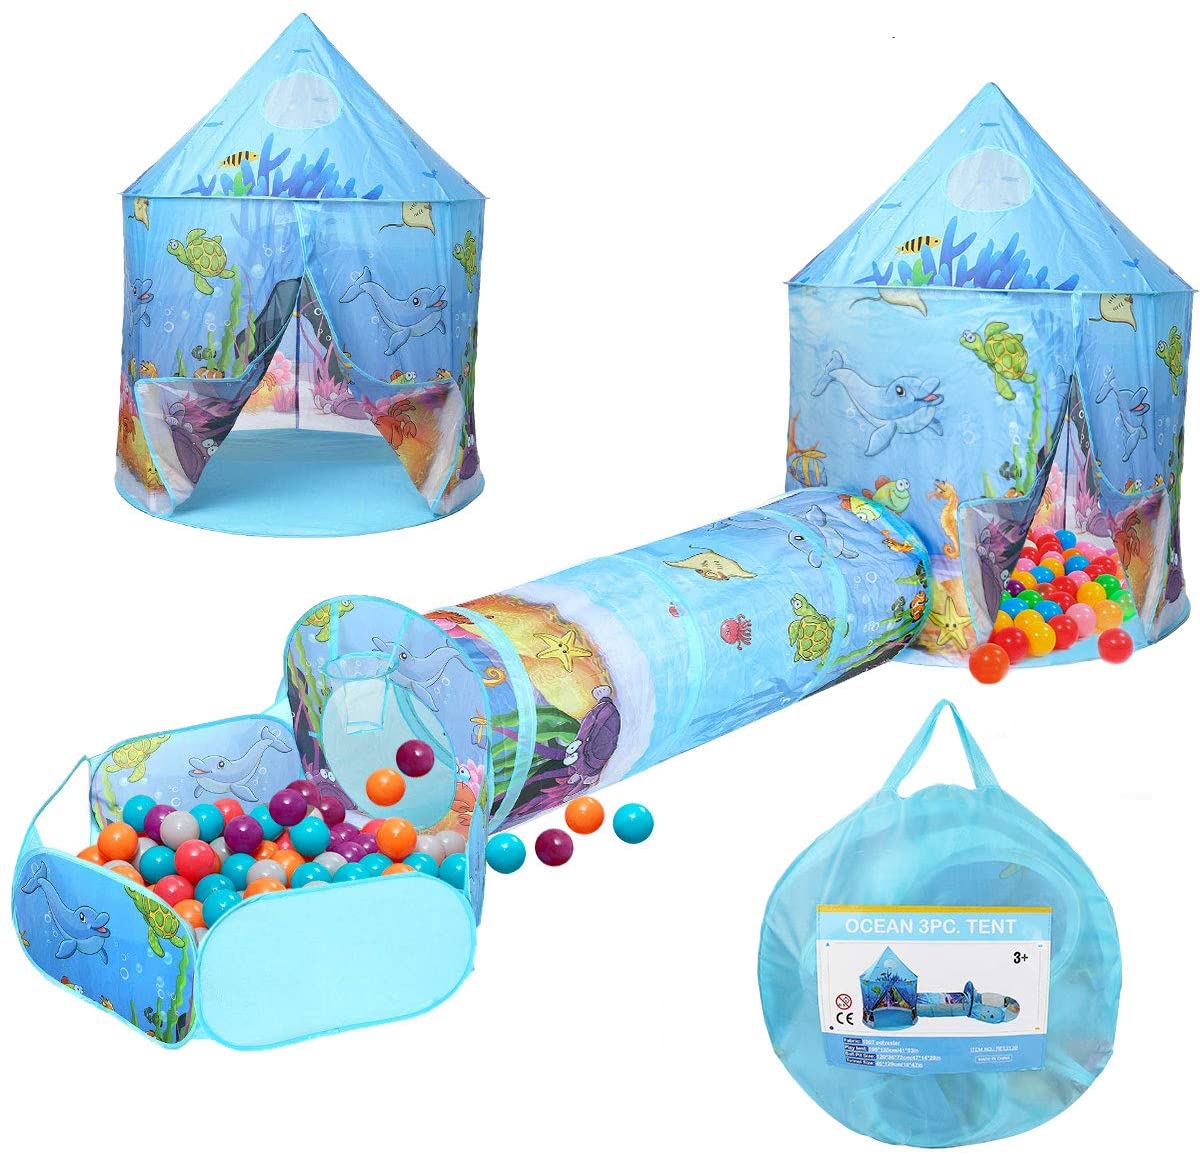 Kinderzelt mit Tunnel Spielzelt Bällebad Zelt Krabbeltunnel Babyzelt DHL 